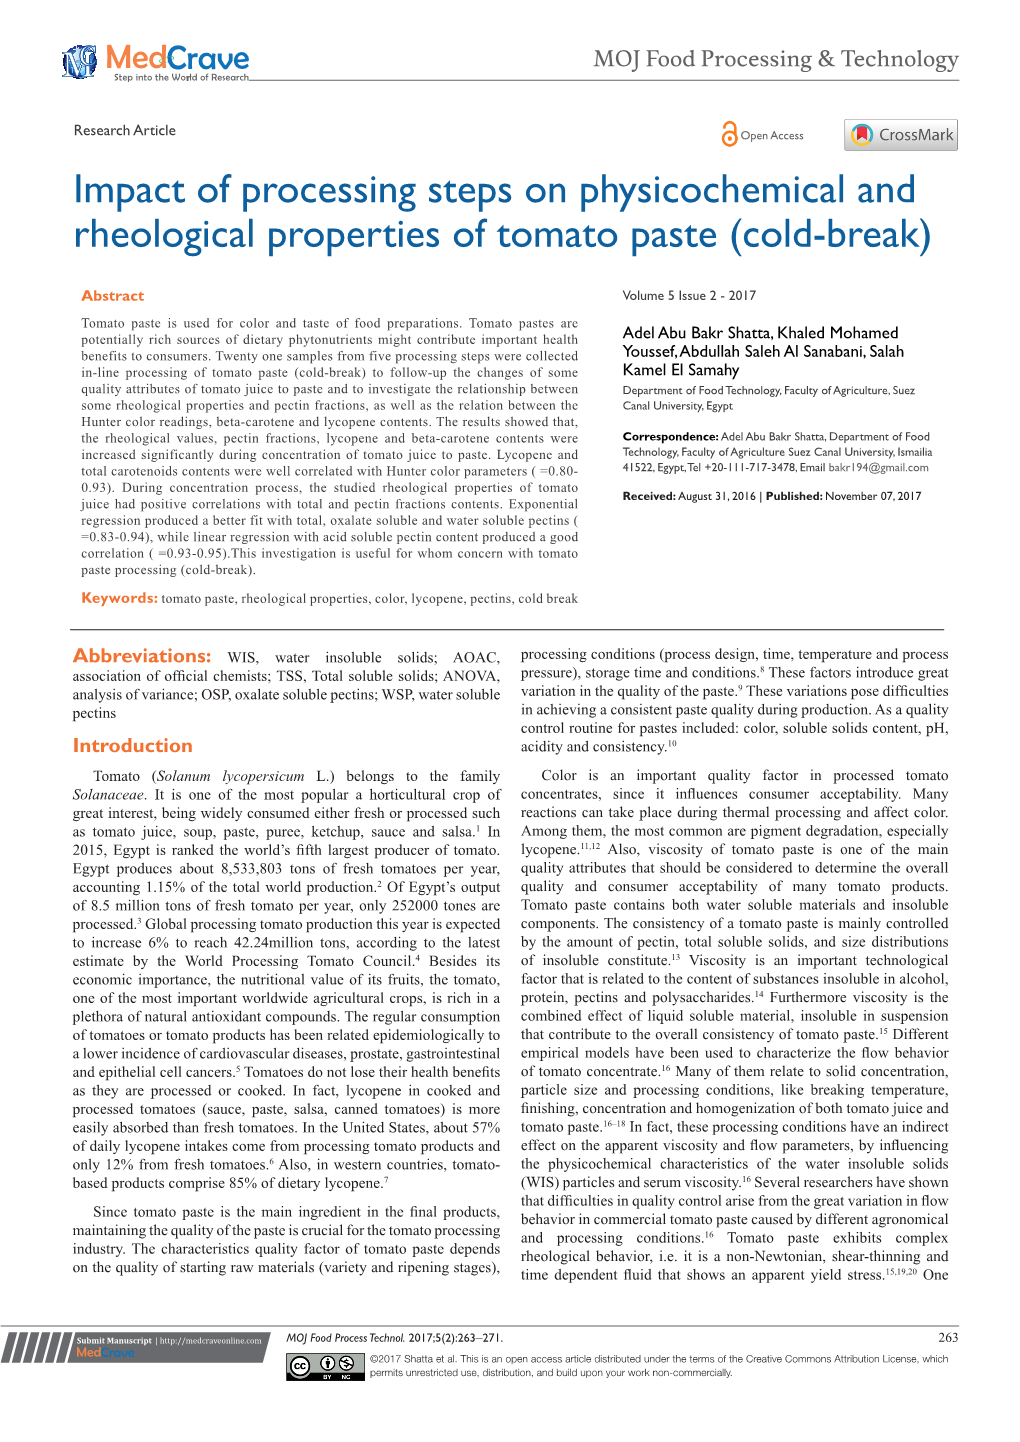 Properties of Tomato Paste (Cold-Break)